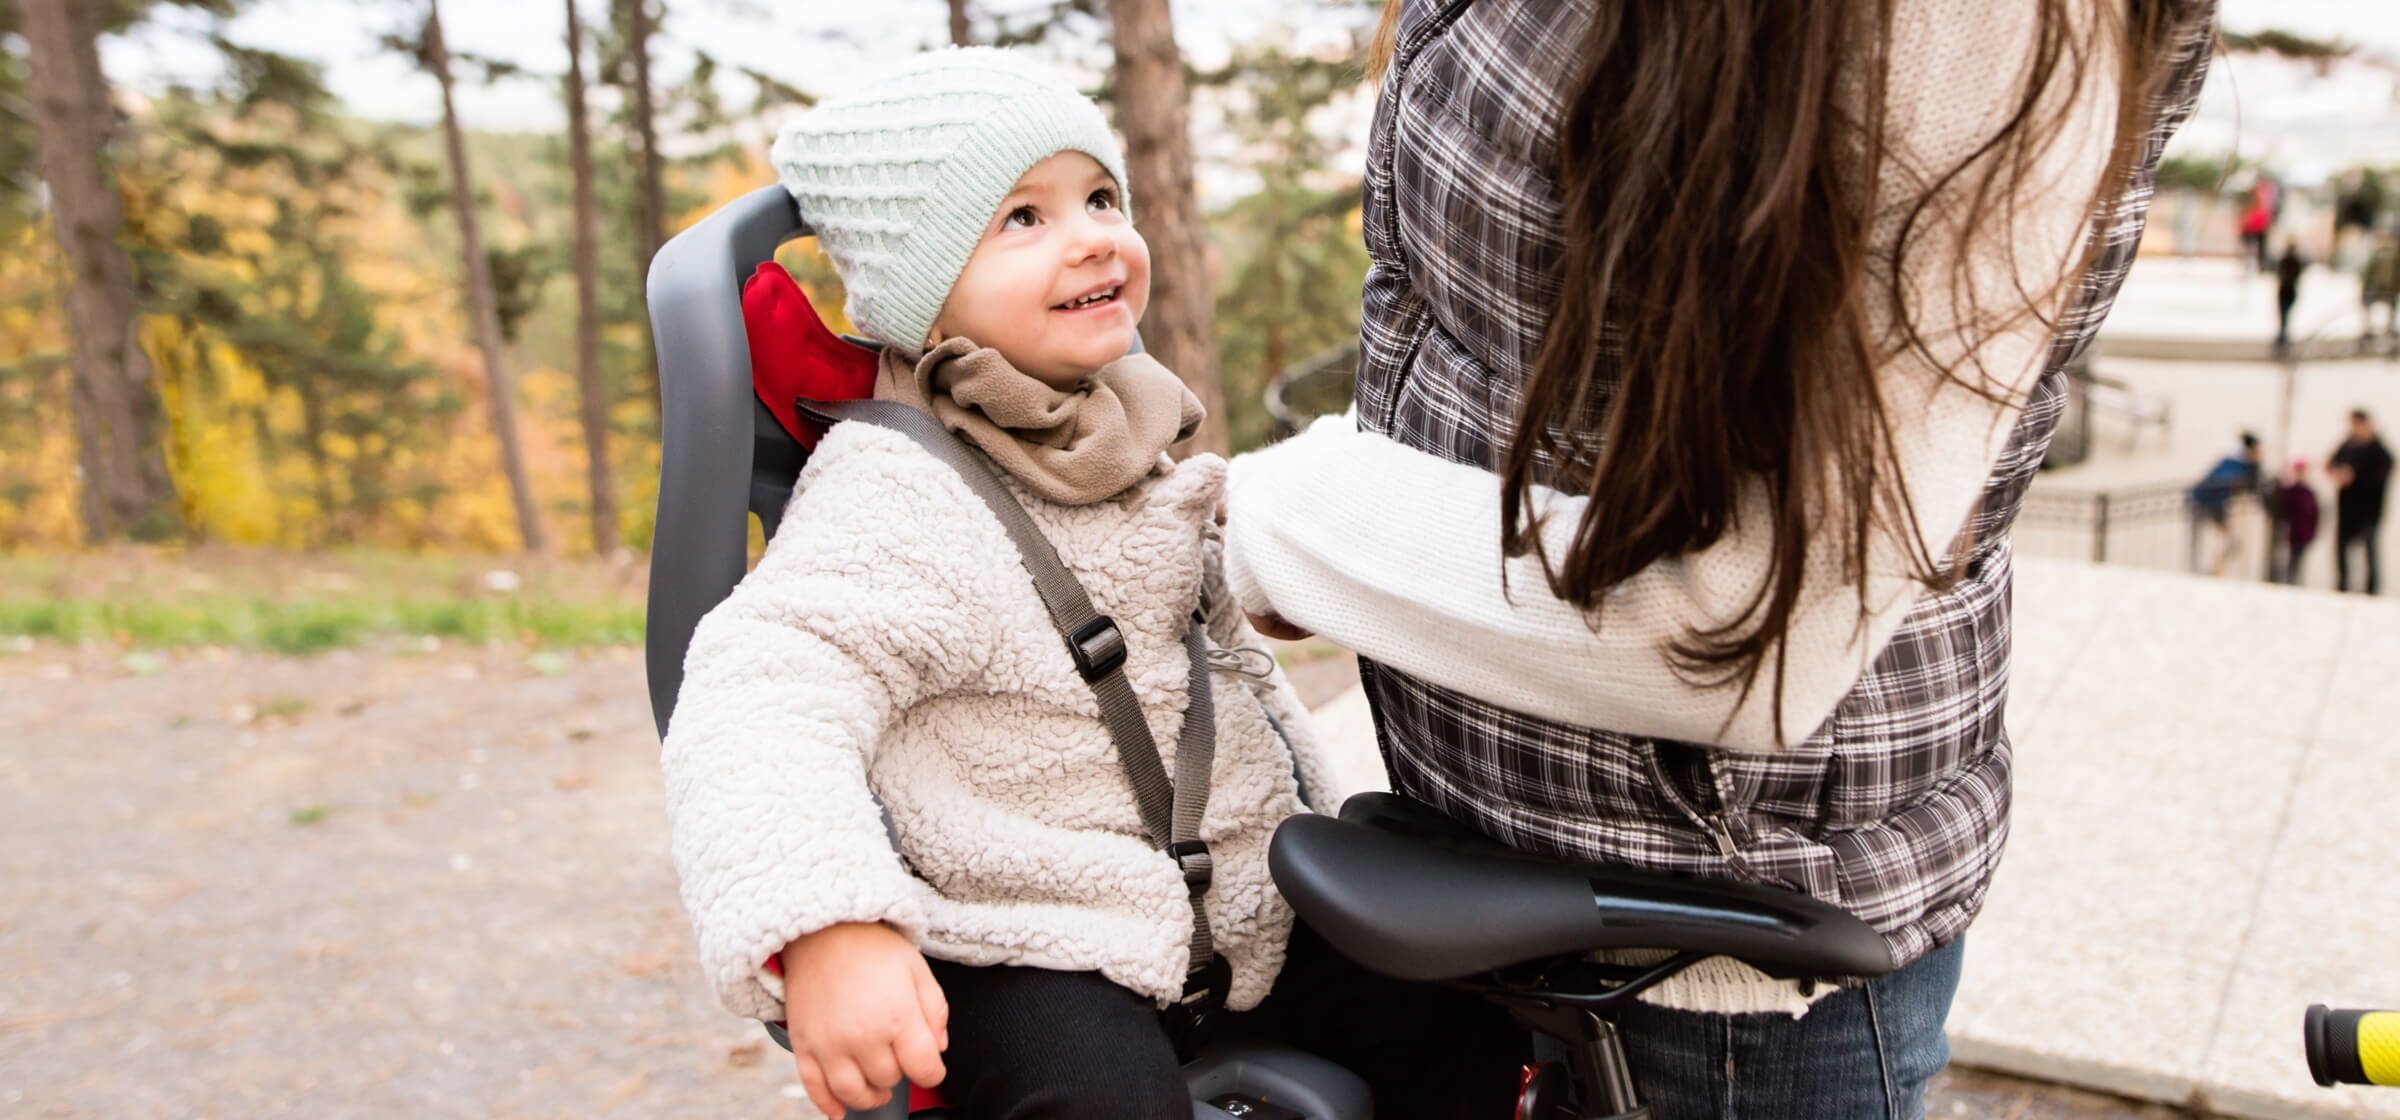 Best Child Bike Seats Reviewed